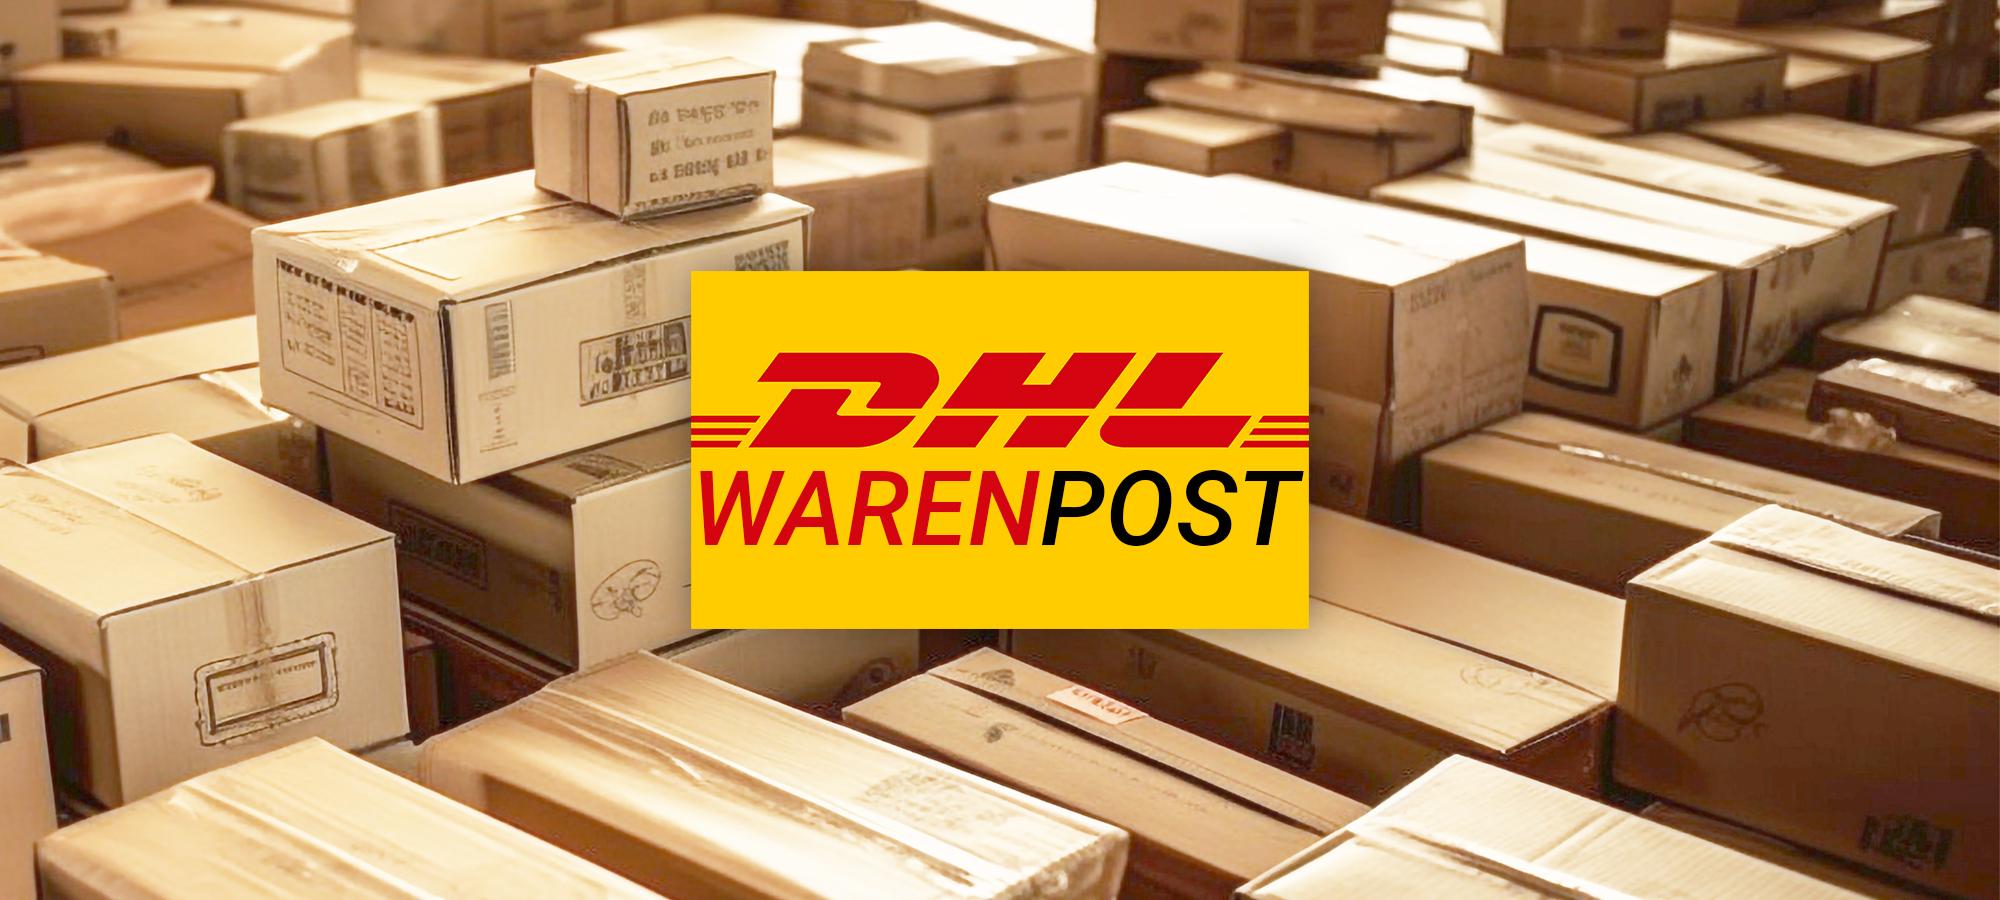 Warenpost shipping